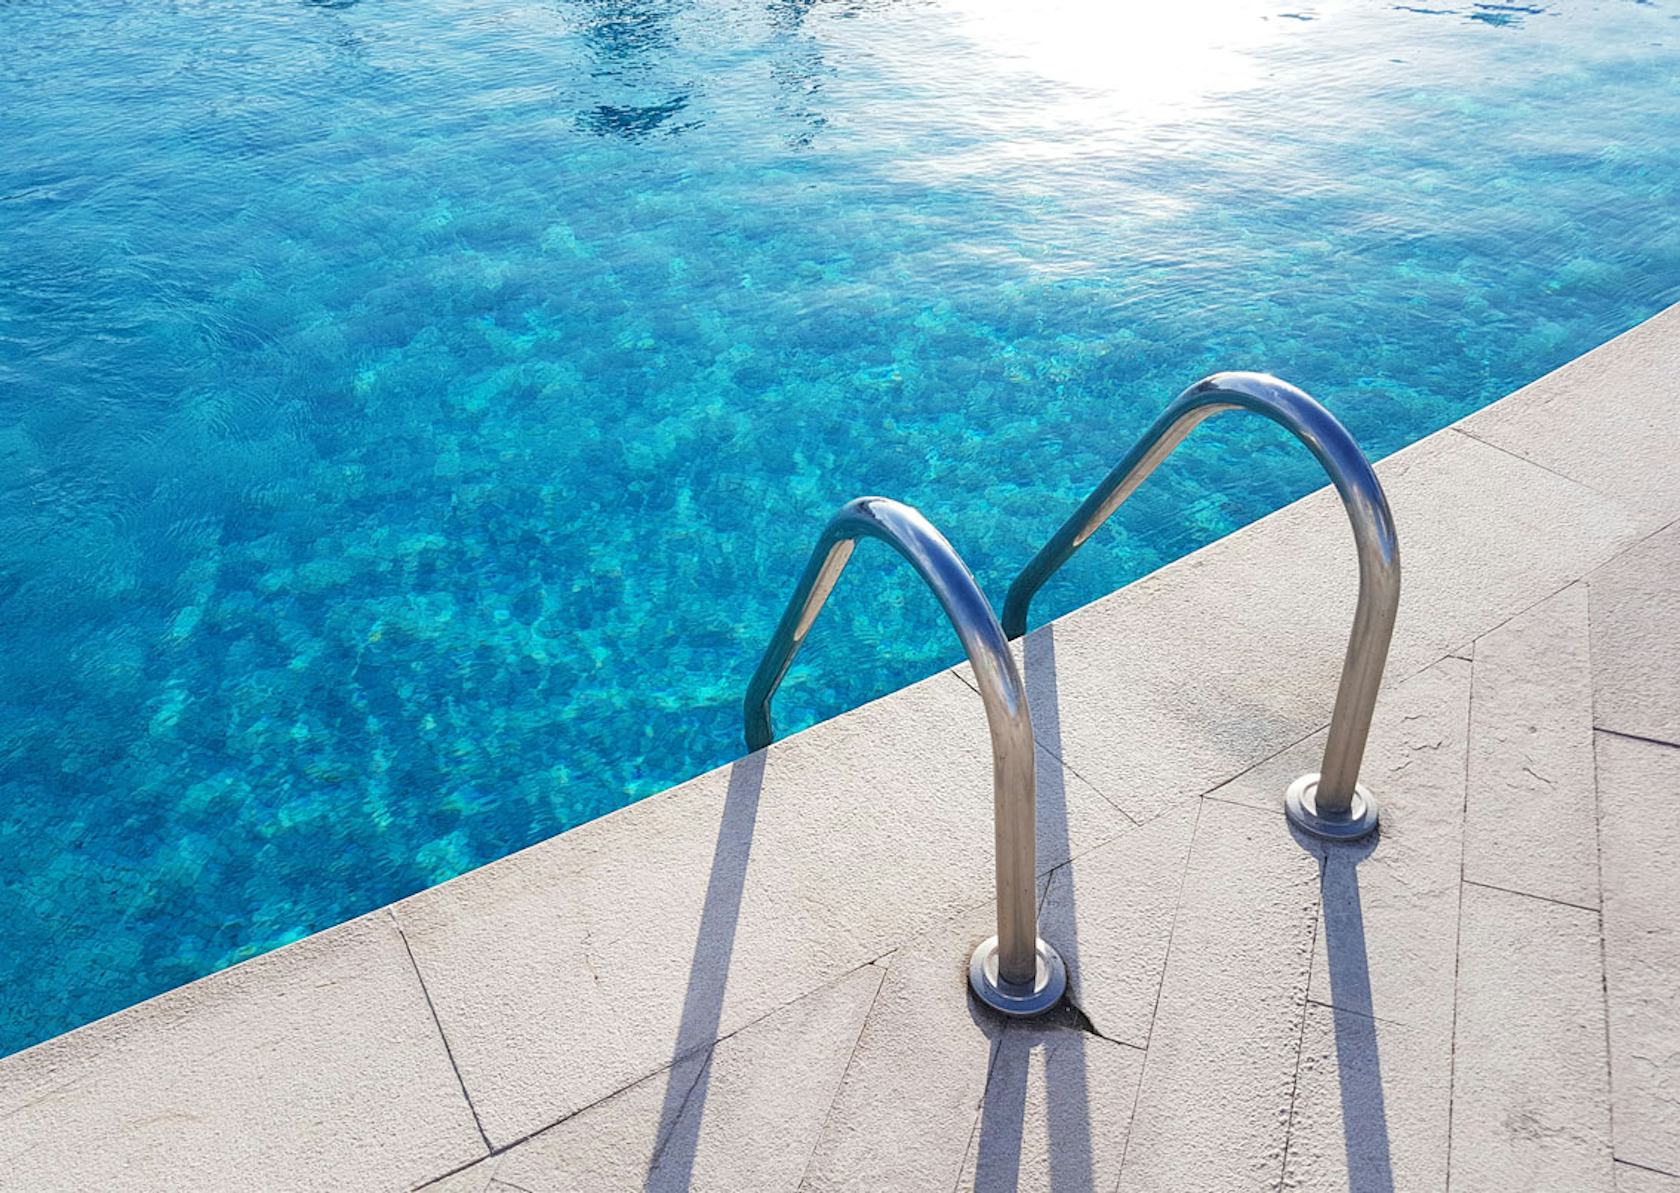 water handrail banister pool swimming pool